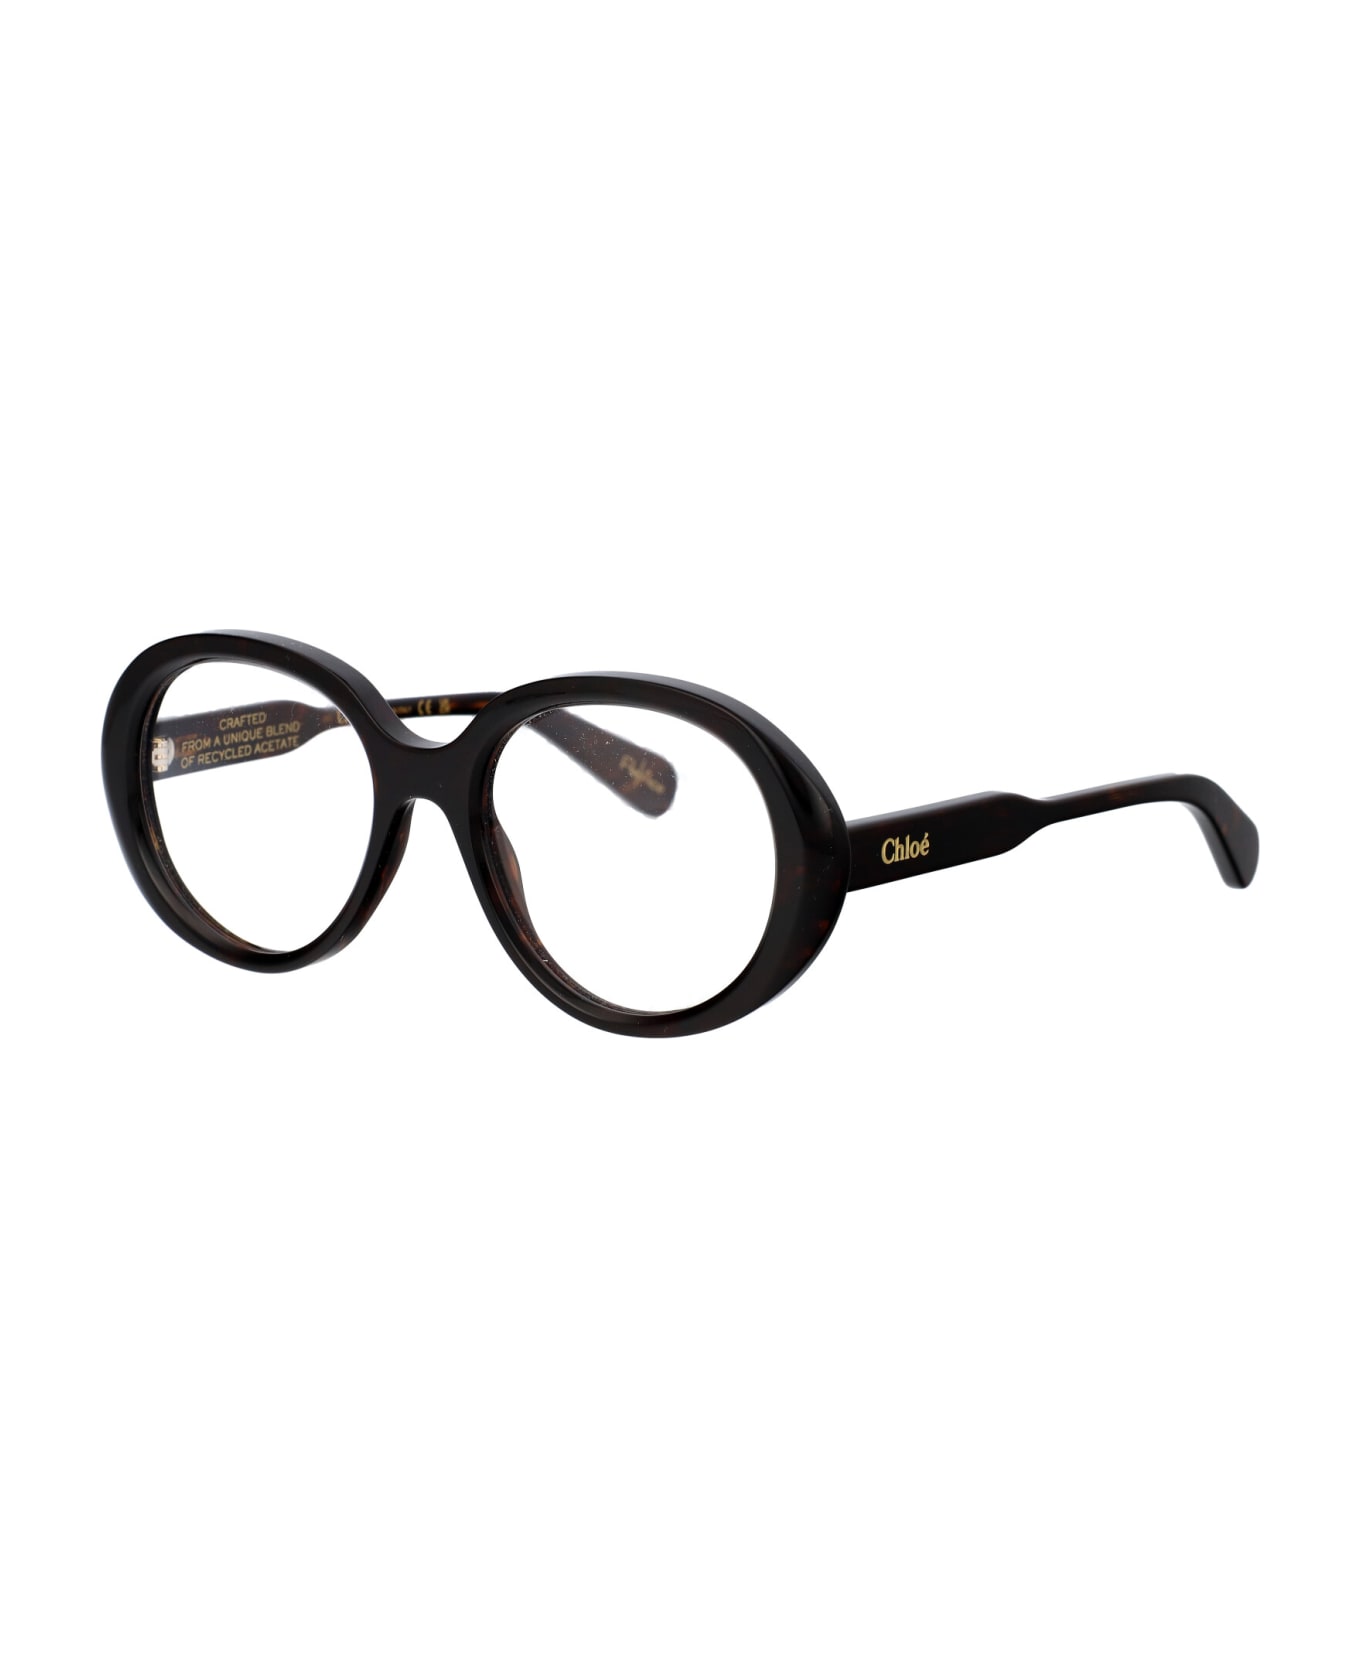 Chloé Eyewear Ch0221o Glasses - 002 HAVANA HAVANA TRANSPARENT